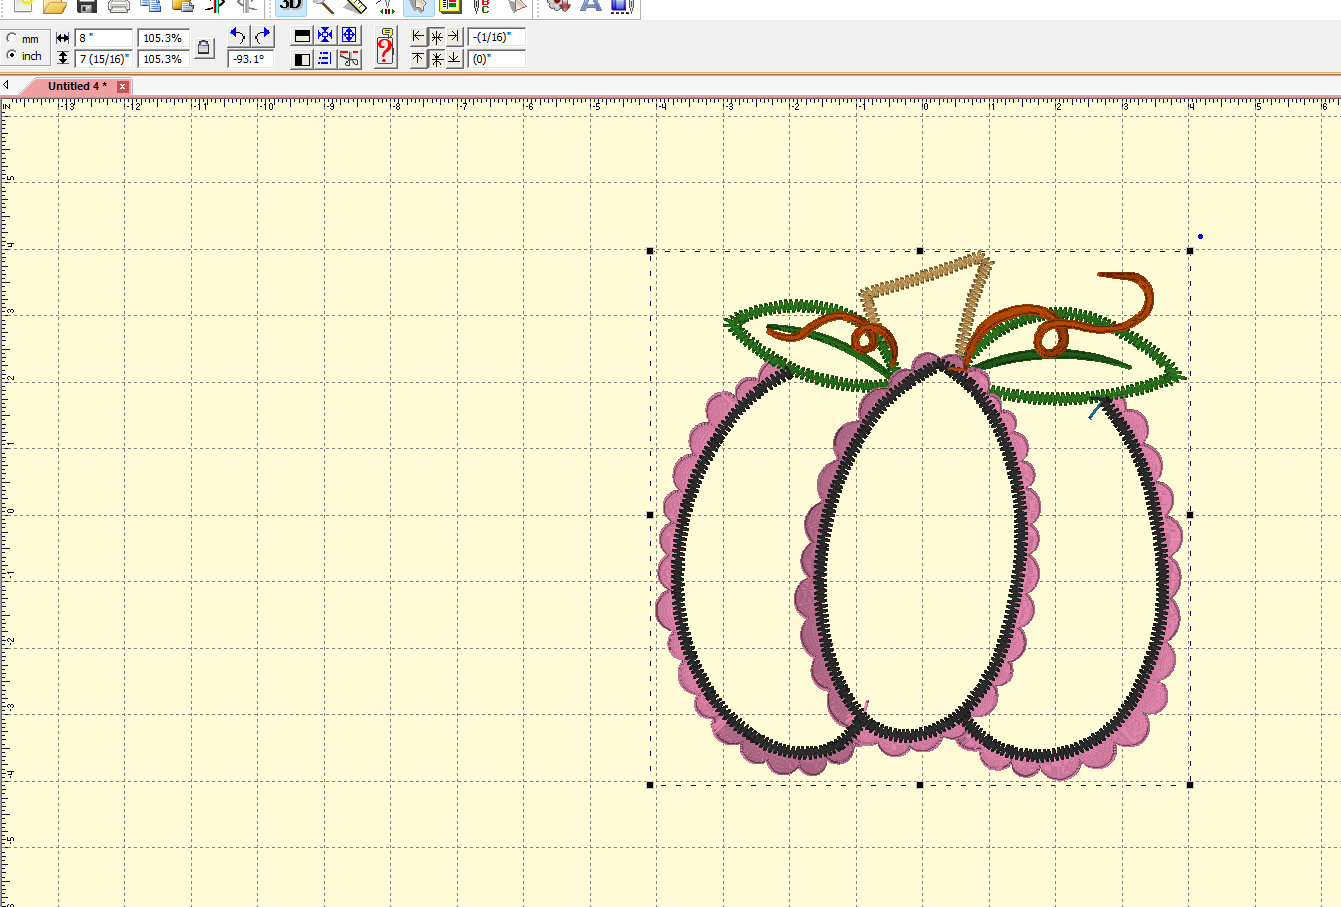 Scallop Pumpkin Applique Machine Embroidery Design [DST]